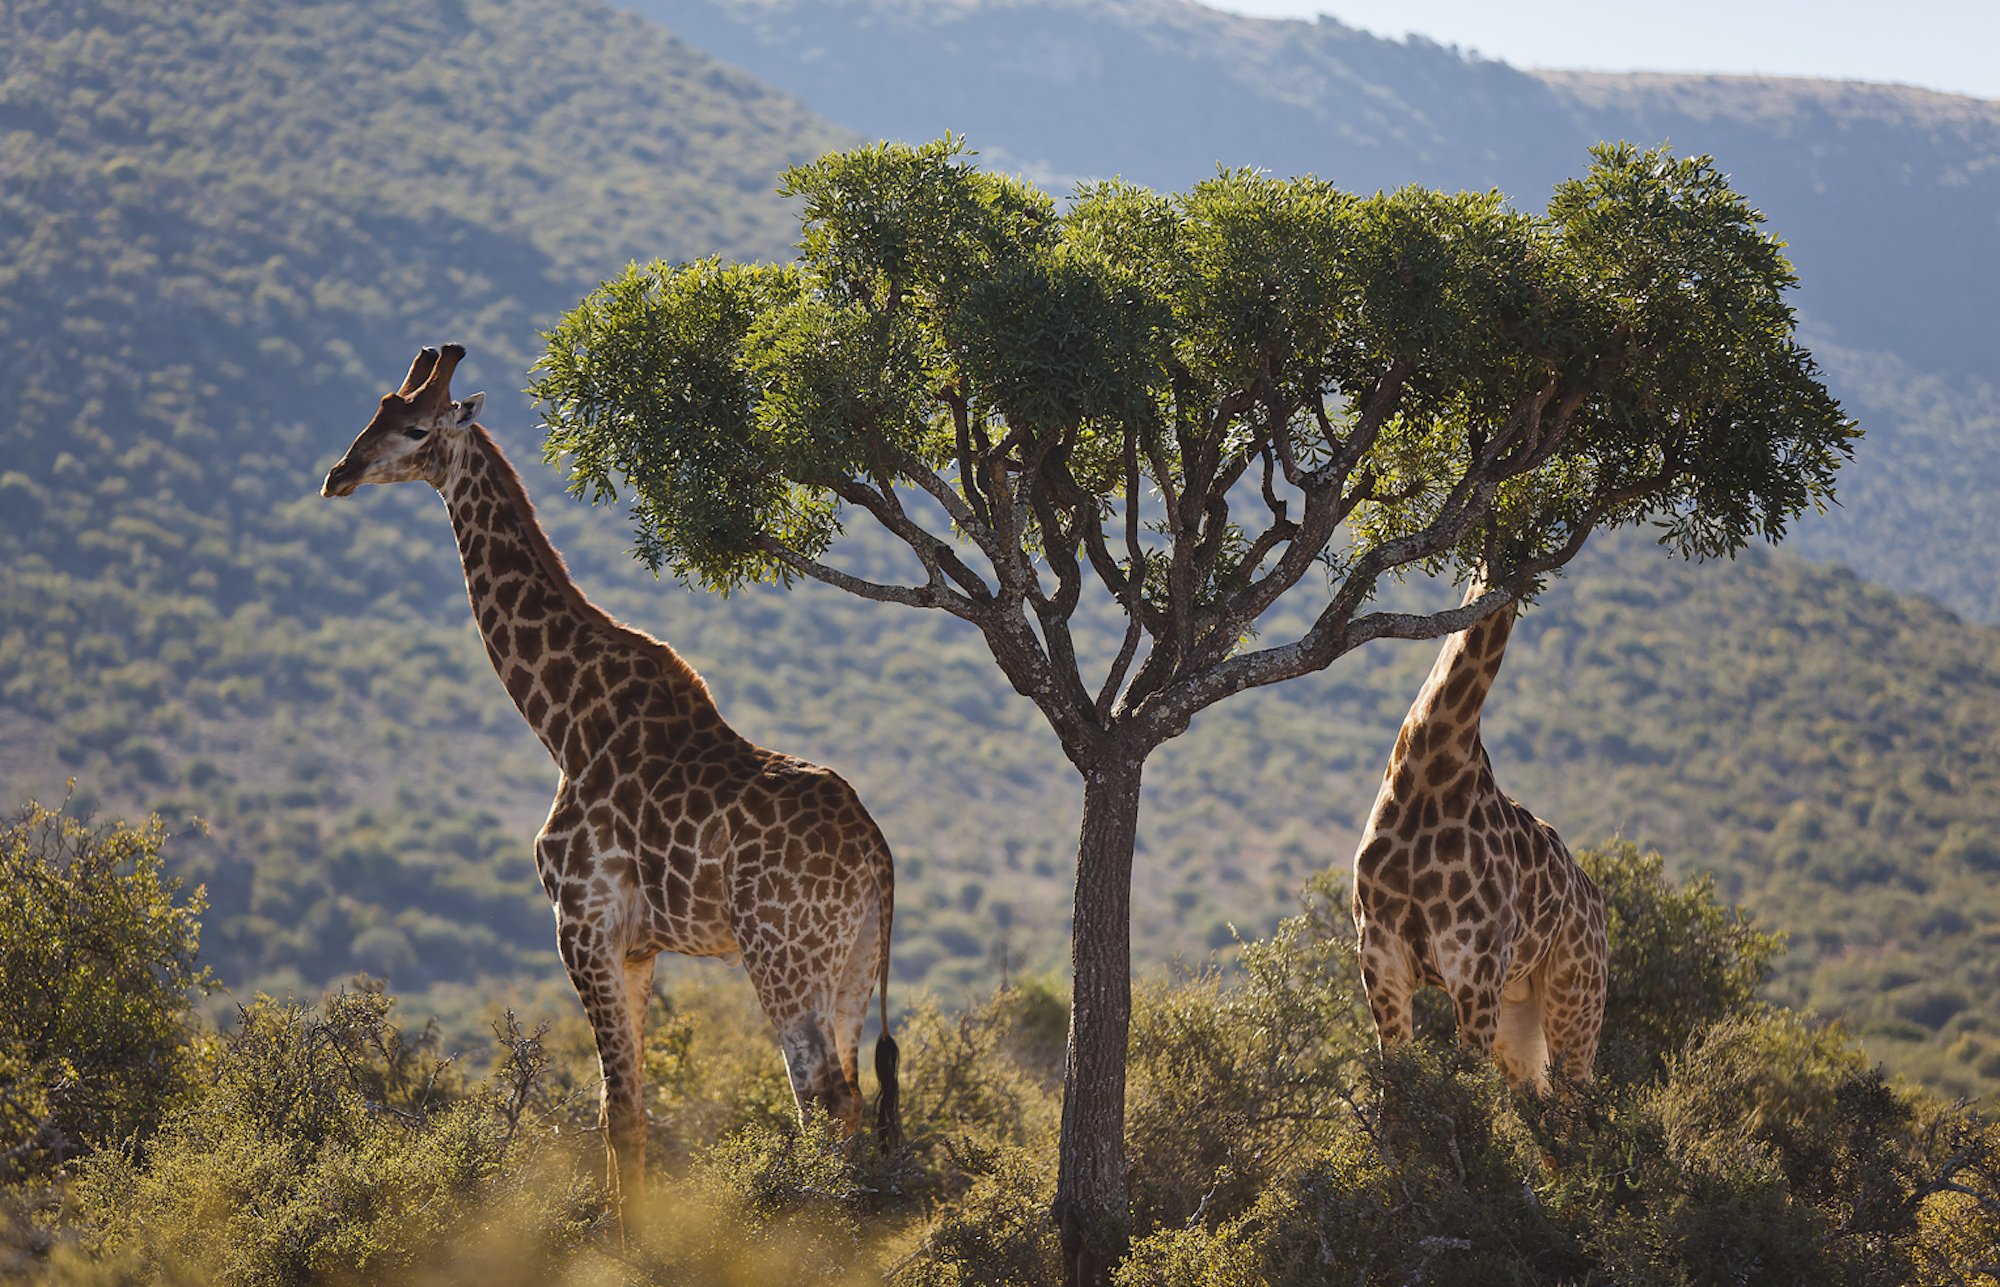 Copy of Copy of giraffe-head-in-tree-samara-karoo-south-africa-etienne-oosthuizen.jpg